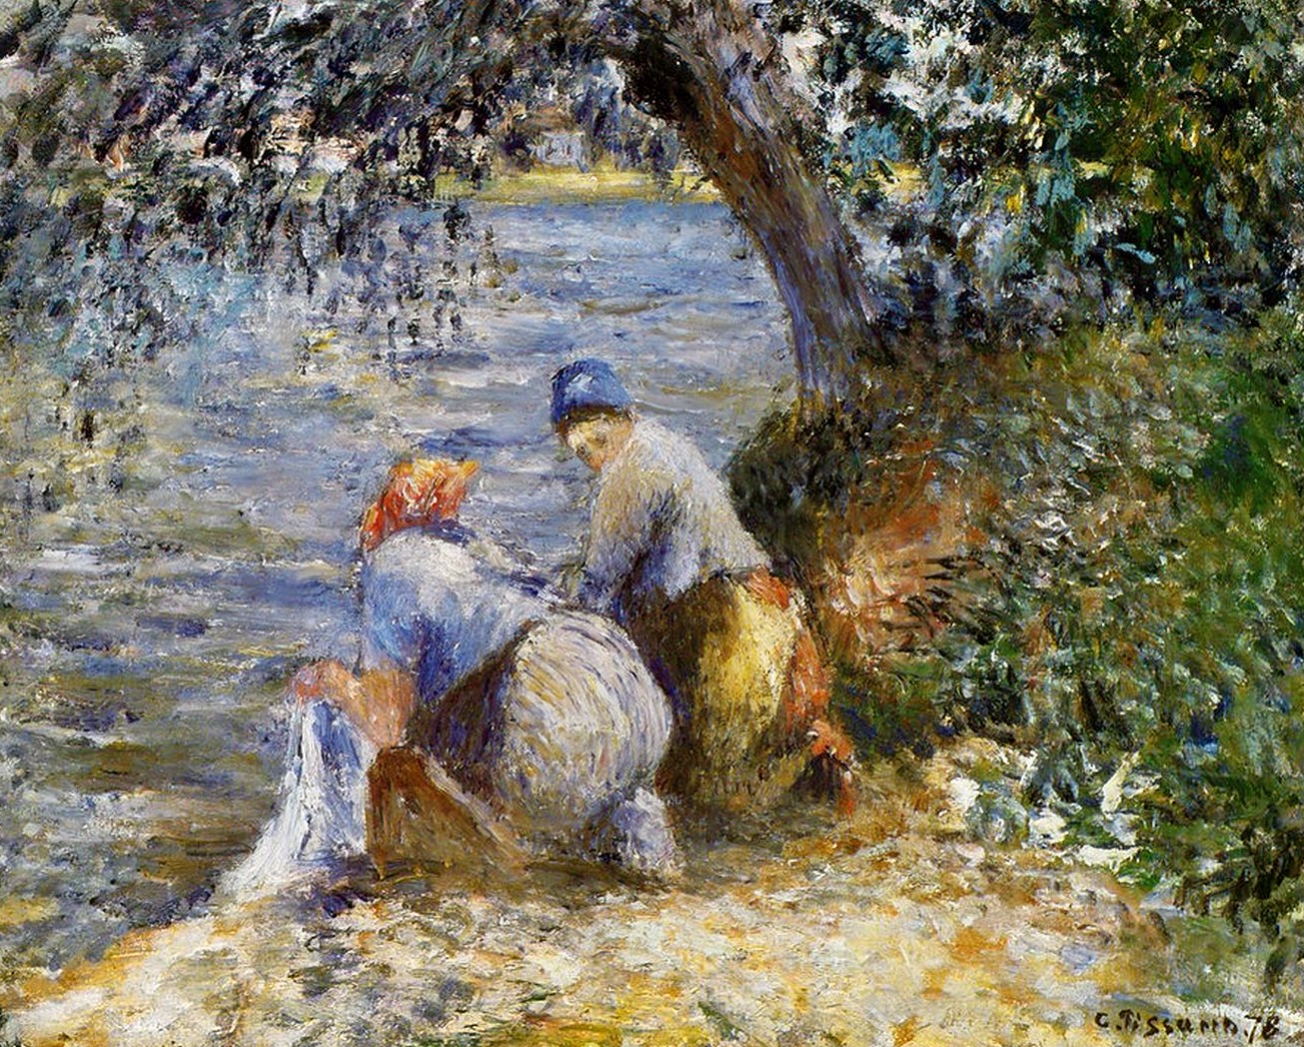 Camille+Pissarro-1830-1903 (251).jpg